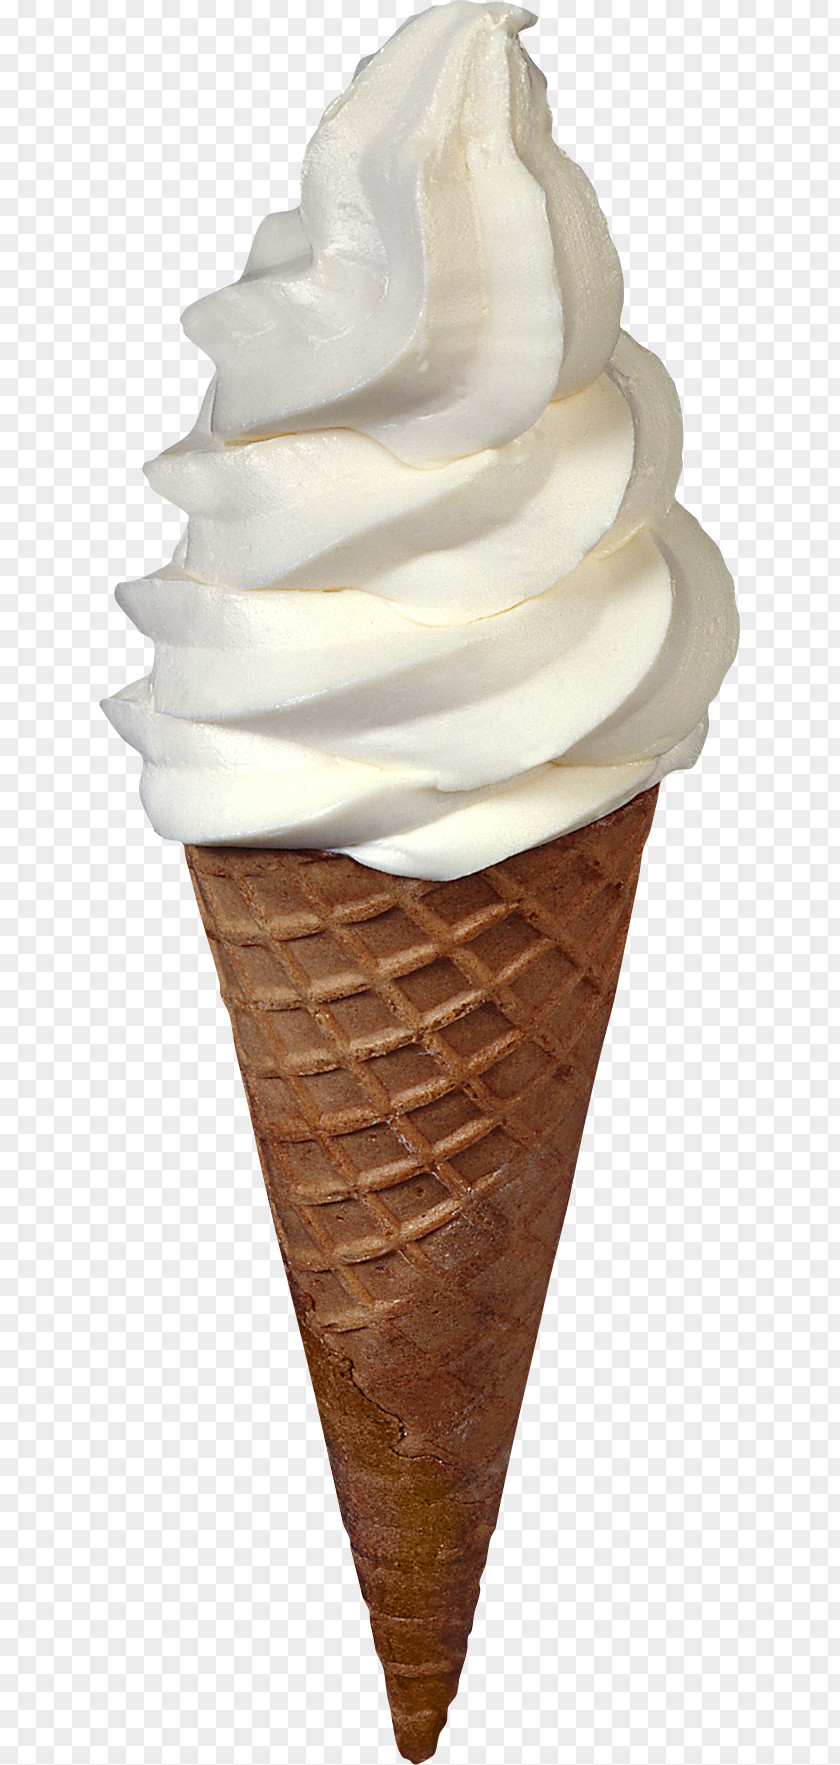 Ice Cream Image Cone Neapolitan Sundae Png Image Pnghero